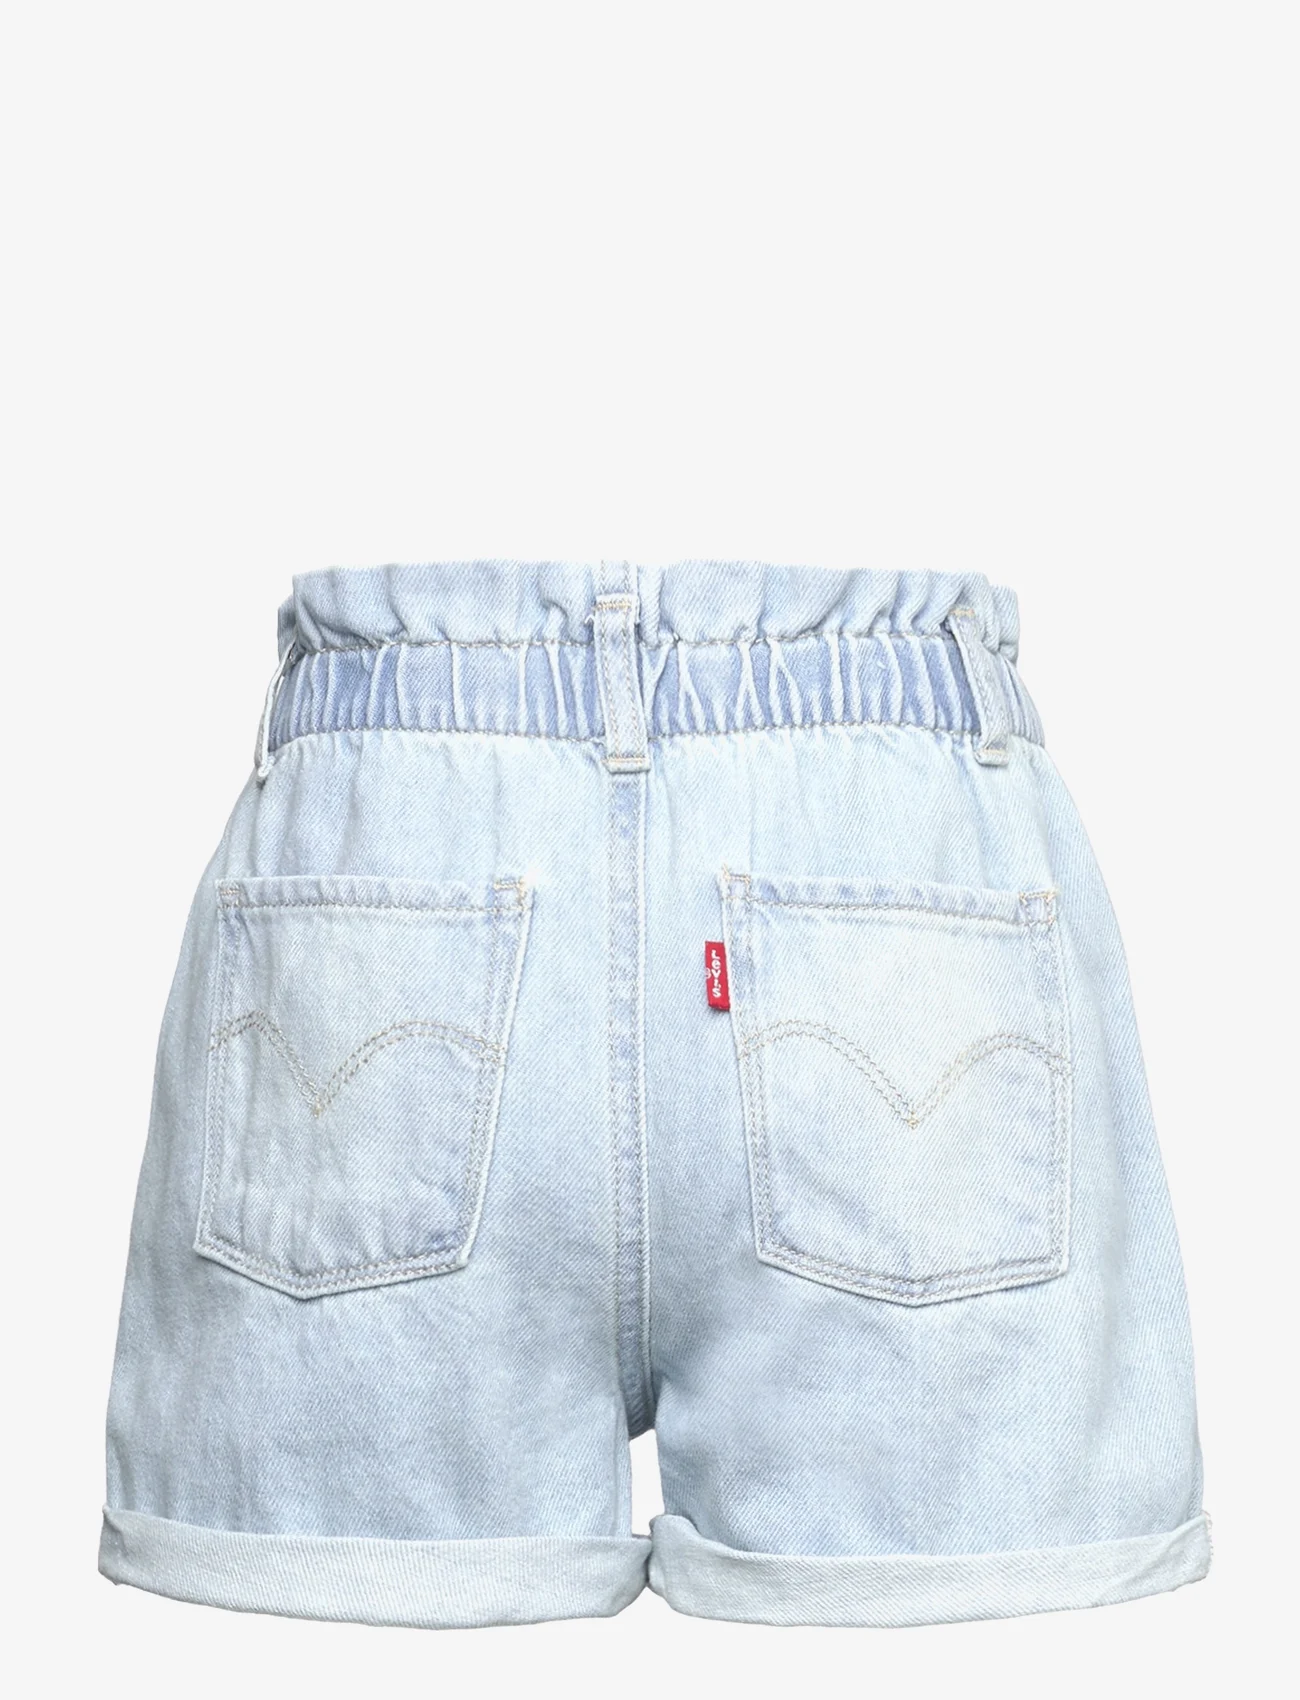 Levi's - Levi's Paper Bag Pocketed Shorts - denimshorts - blue - 1